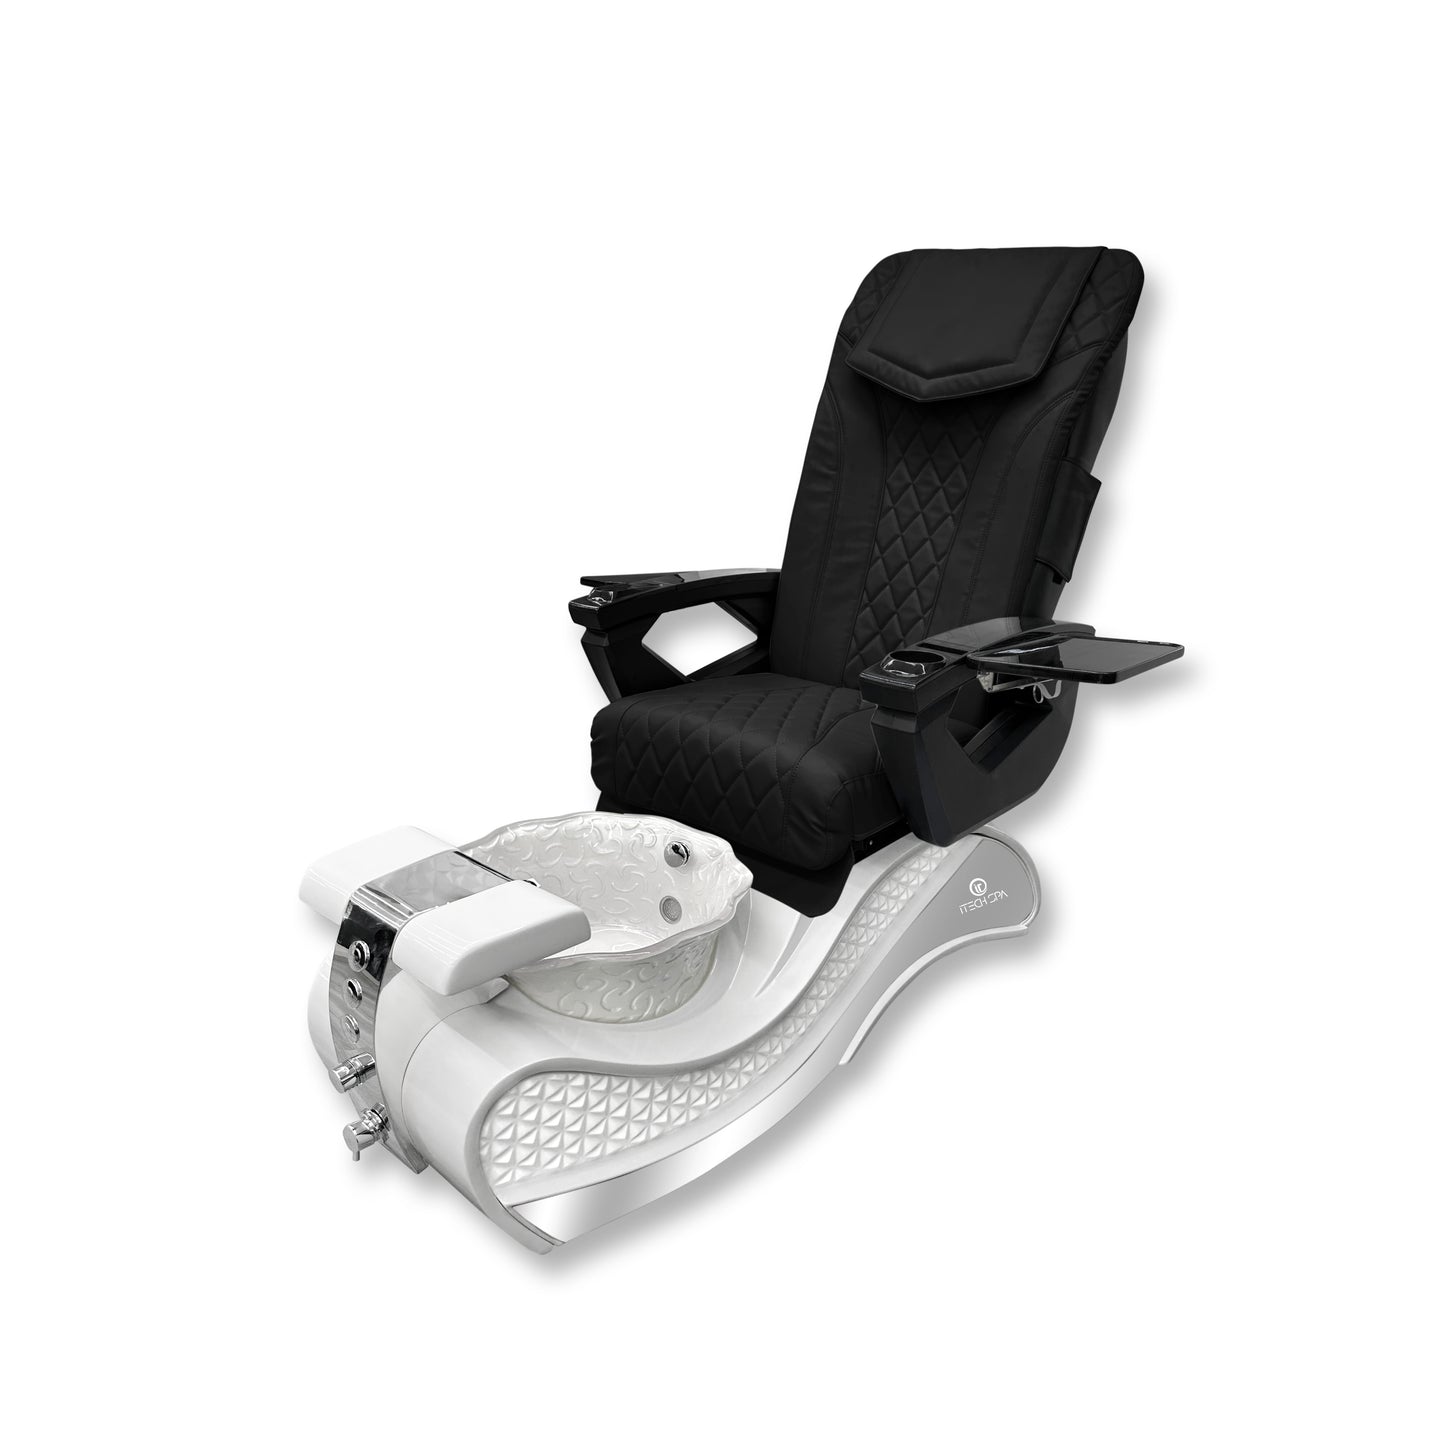 2023 White New Wave Pedicure Spa Chair - Flower Fiberglass Bowl - Itech Back Massage